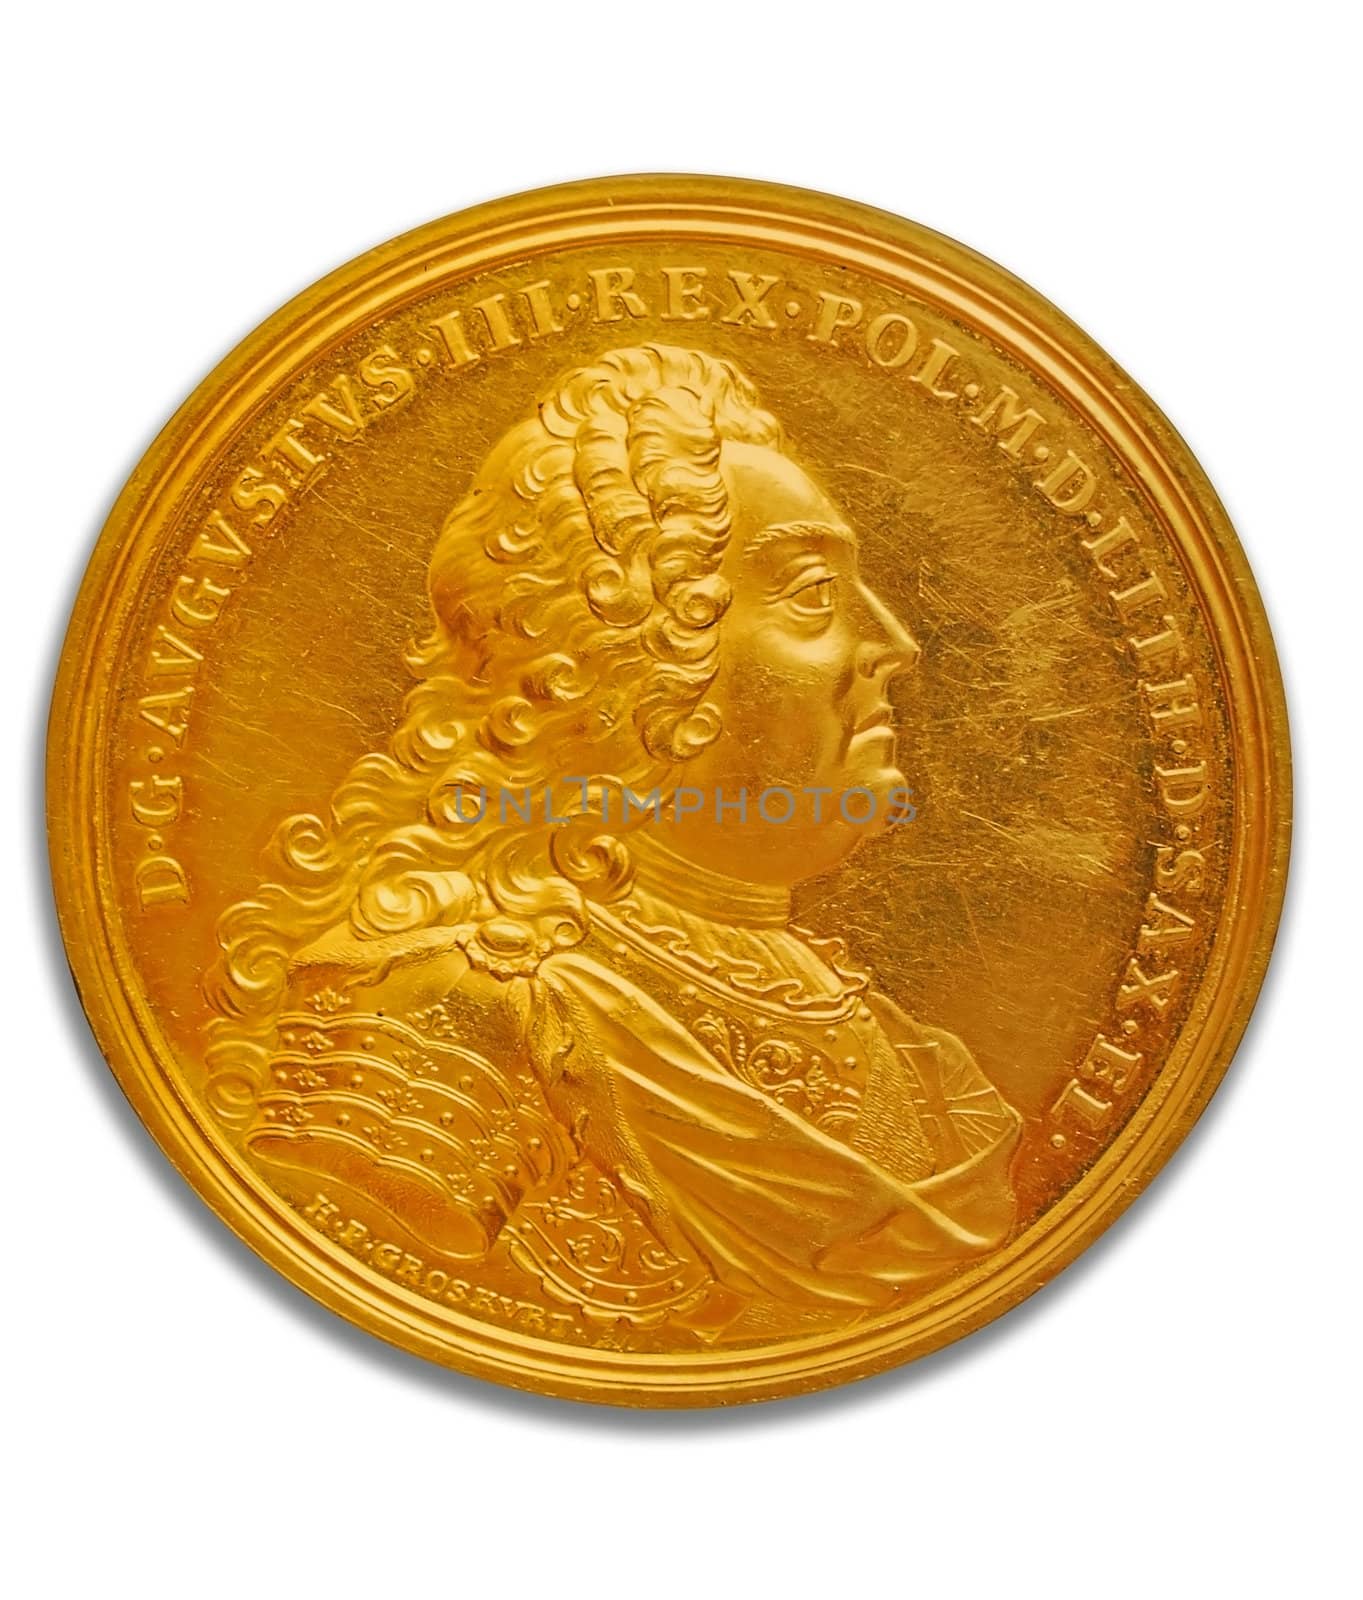 Golden coin by Vectorex